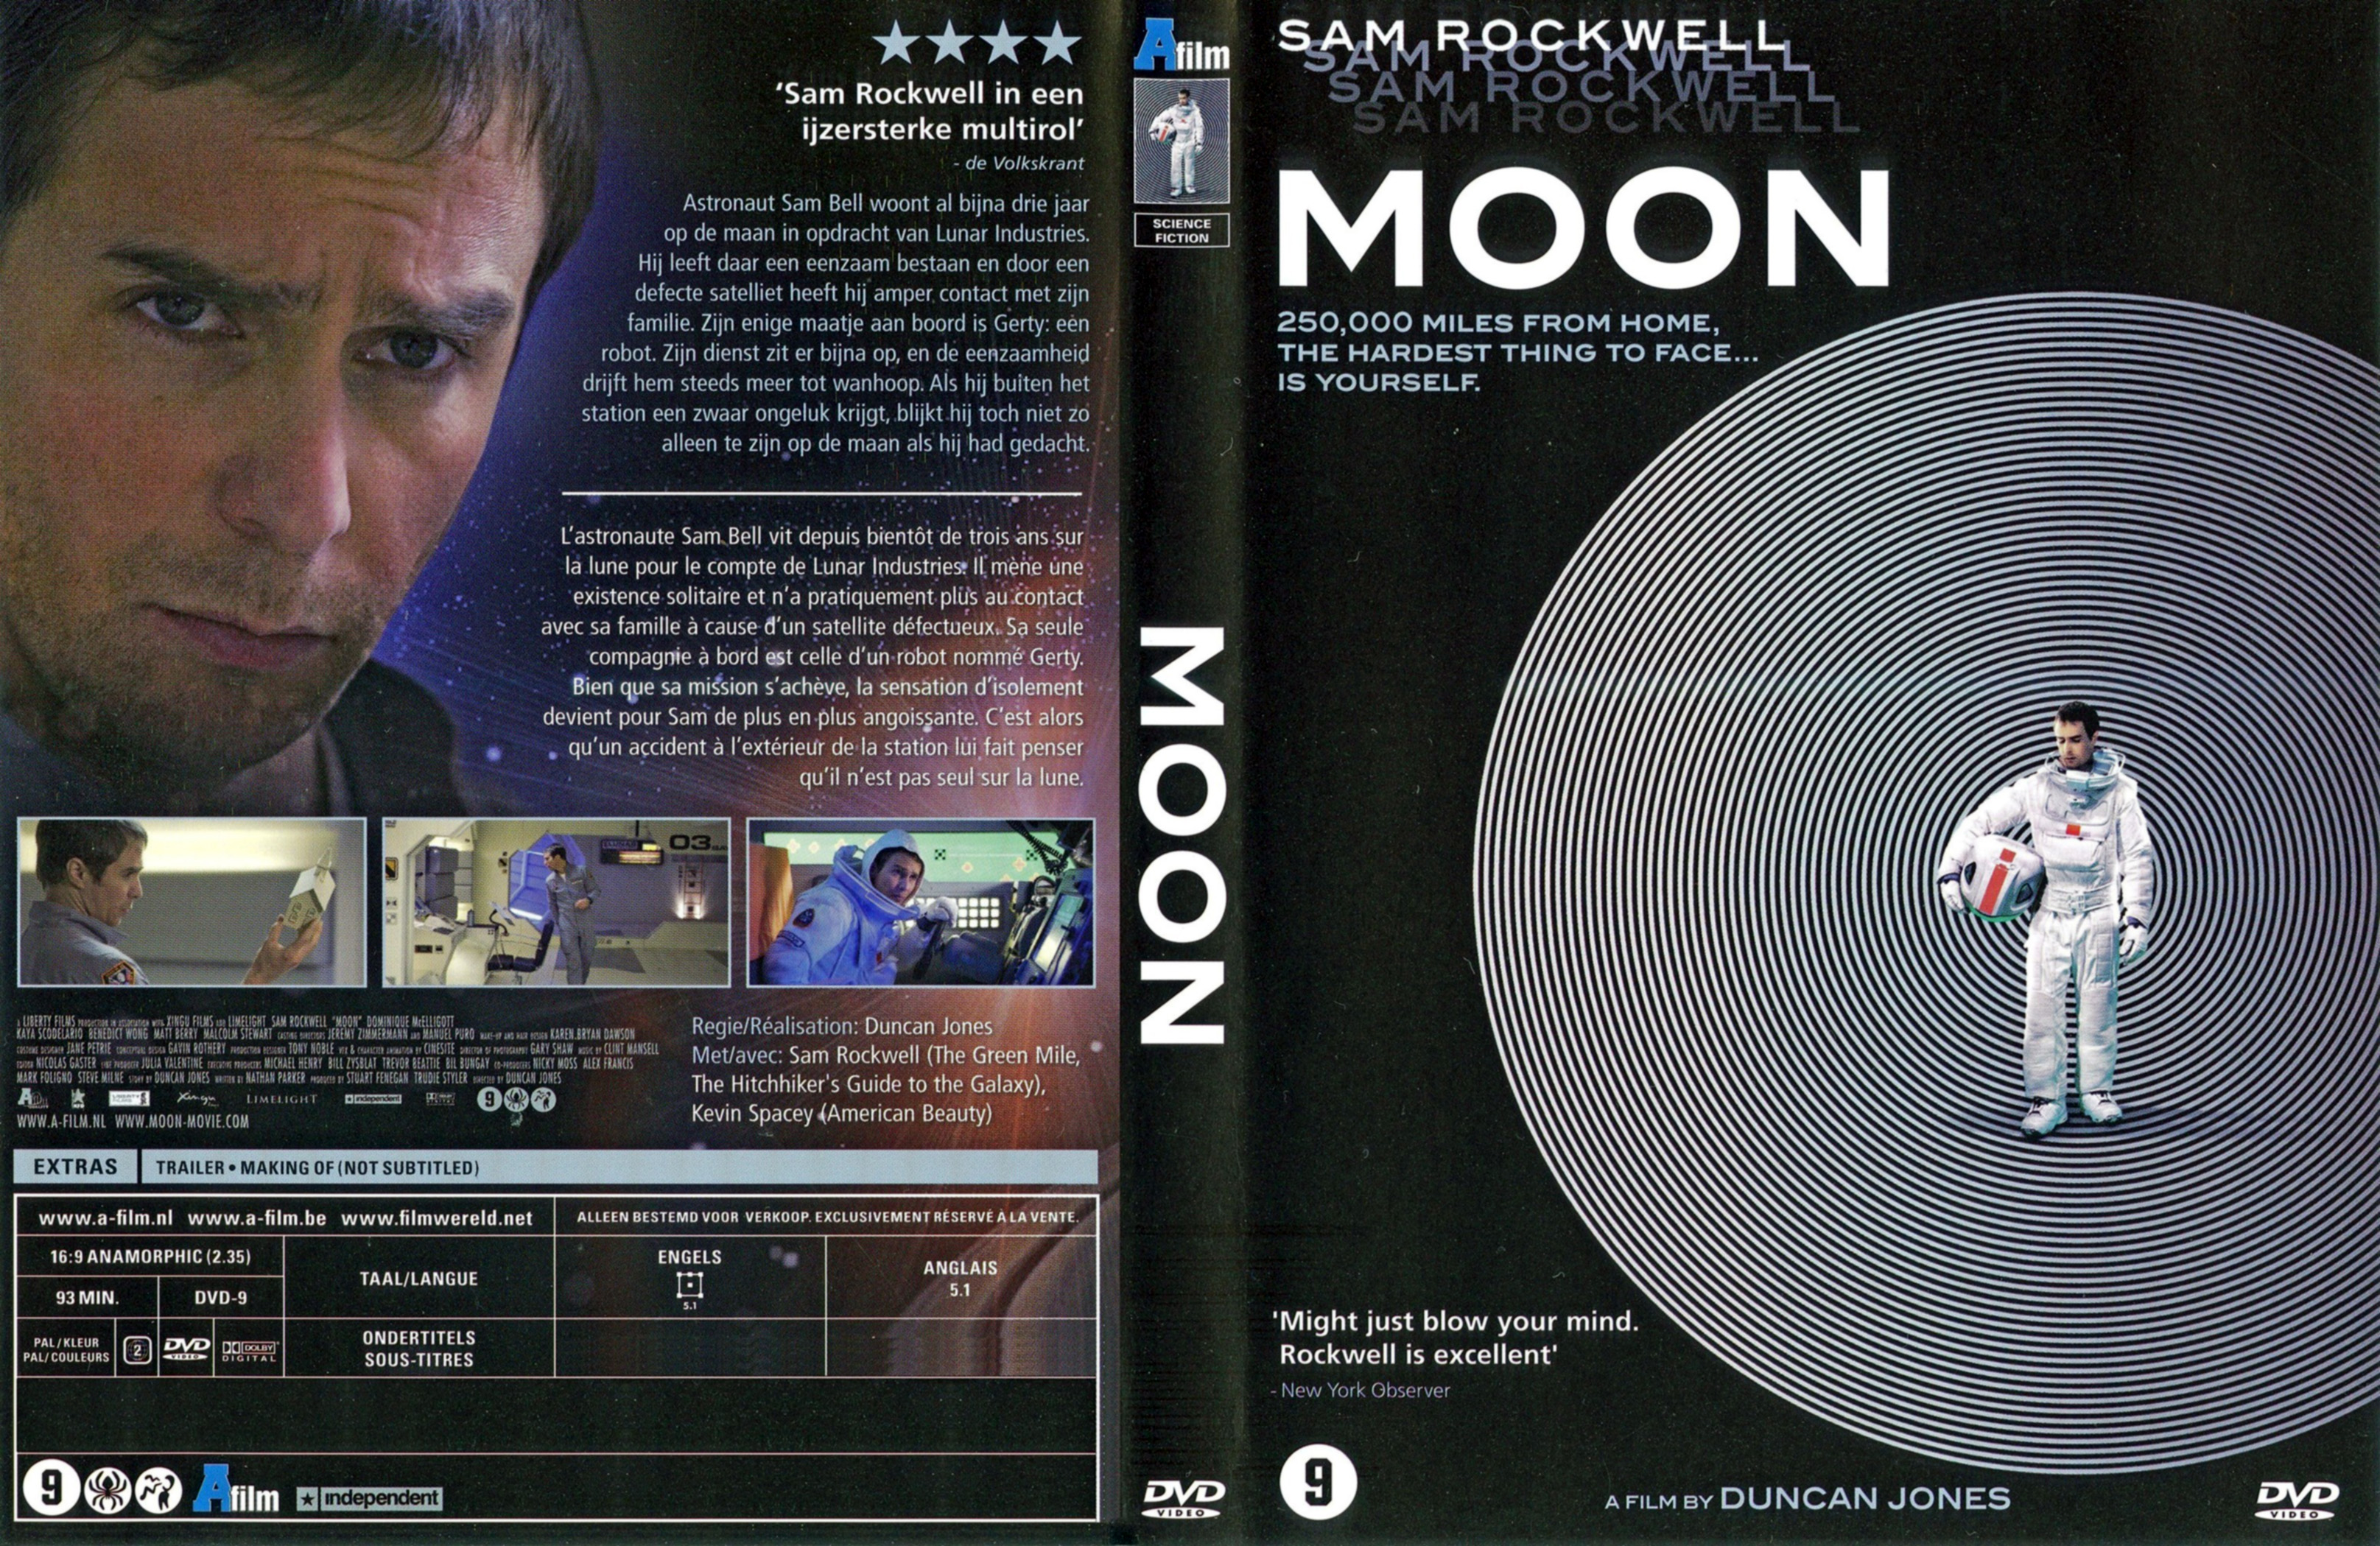 Jaquette DVD Moon